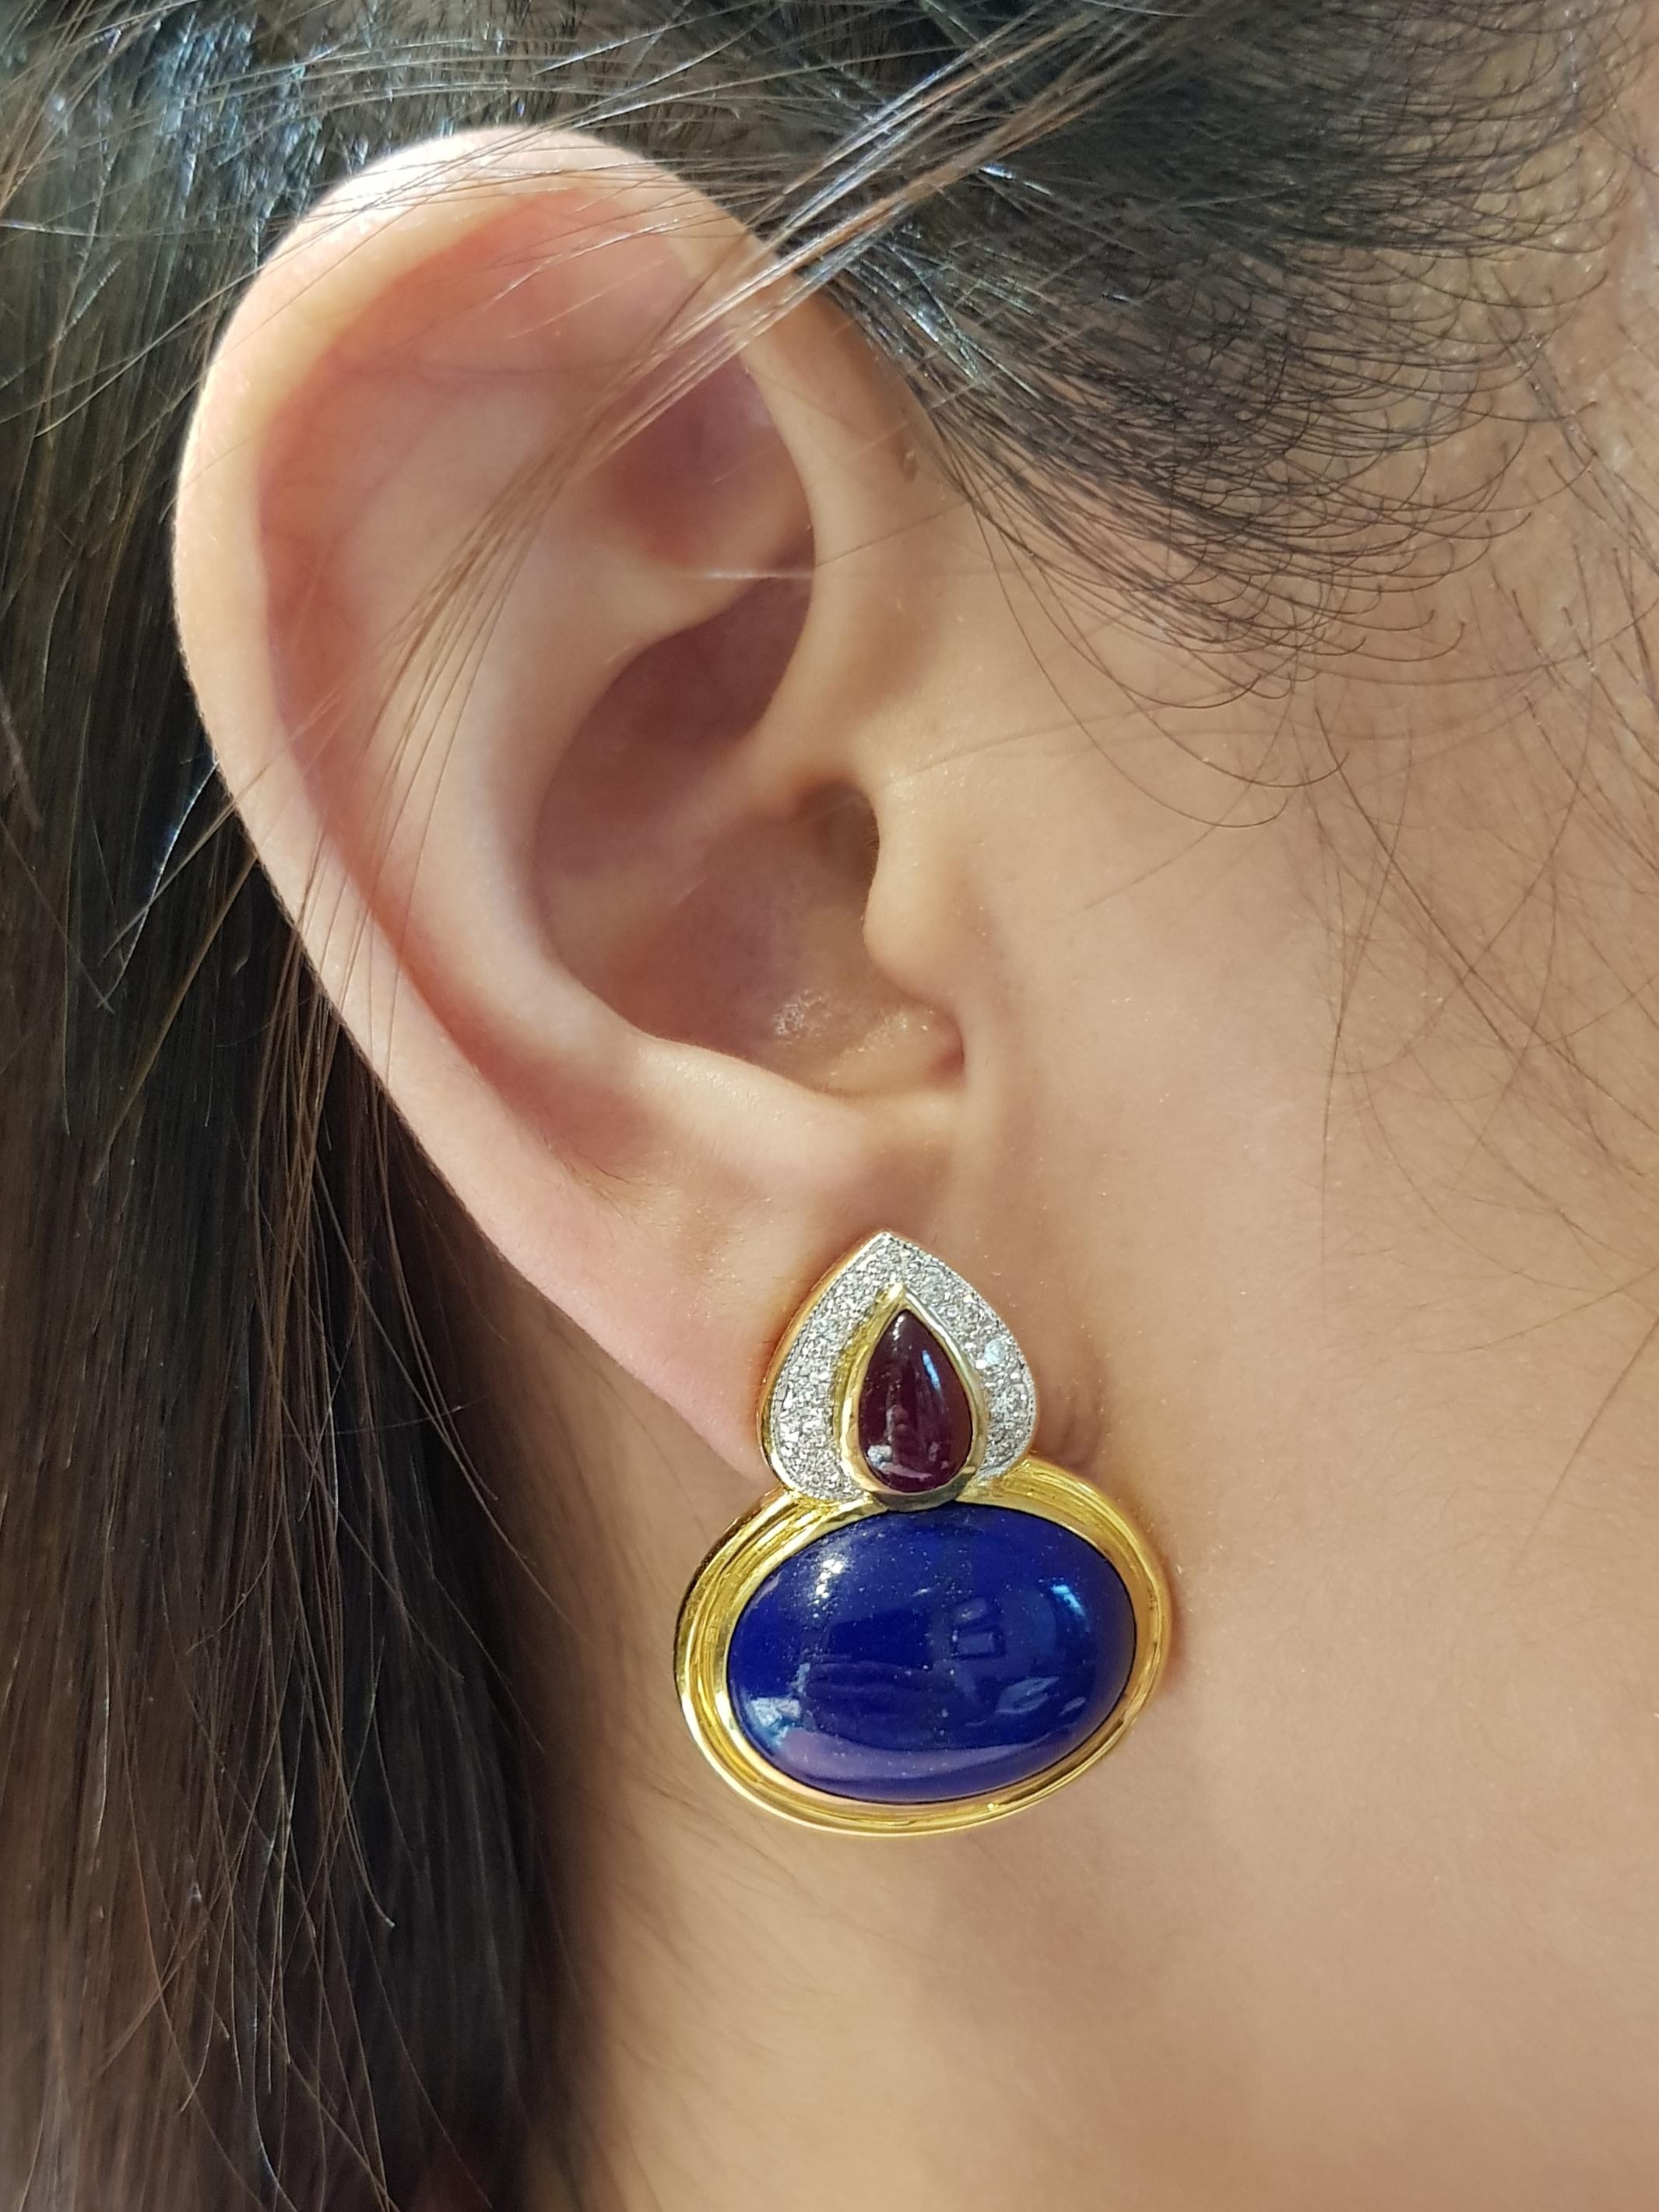 Lapiz Lazuli 35.40 carats with Cabochon Ruby 2.98 carats and Diamond 0.51 carat Earrings set in 18 Karat Gold Settings

Width:  2.5 cm 
Length:  3.0 cm
Total Weight: 21.43 grams

